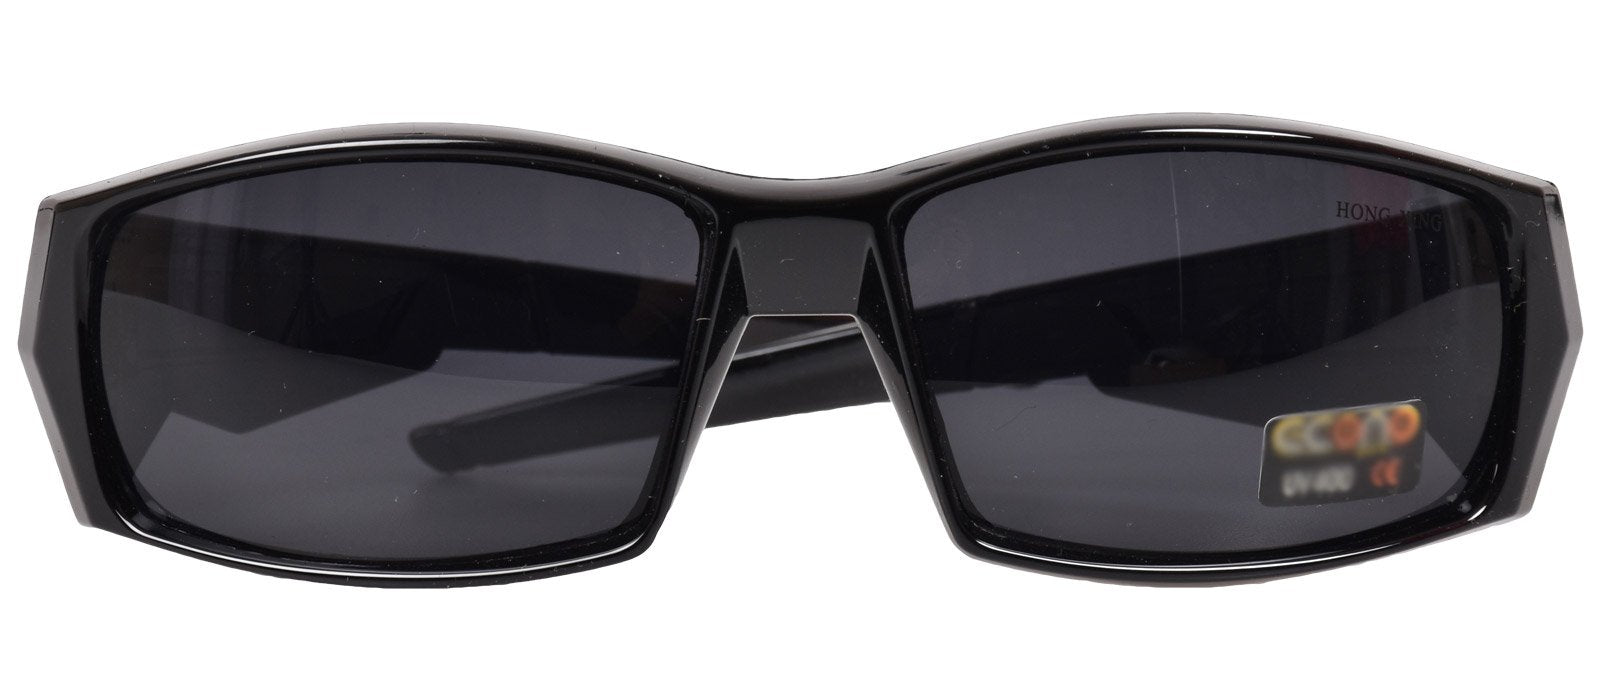 Sunglasses HX007 Black